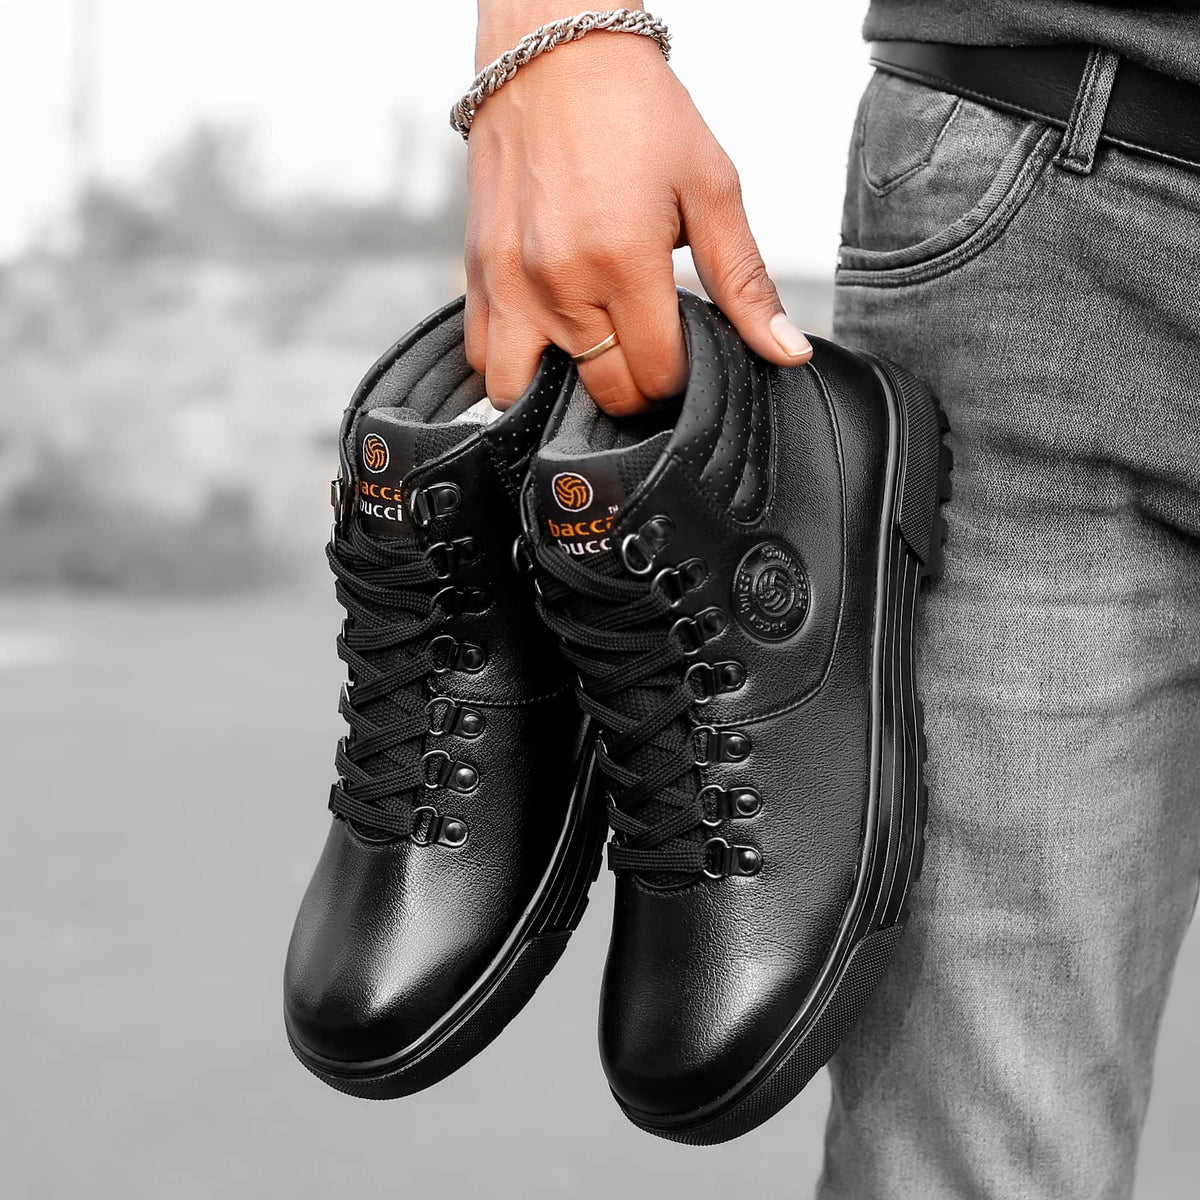 Bata Leather Shoes in Pakistan; comfortable 5 models Formal Informal Casual  Sneakers Sports - Arad Branding